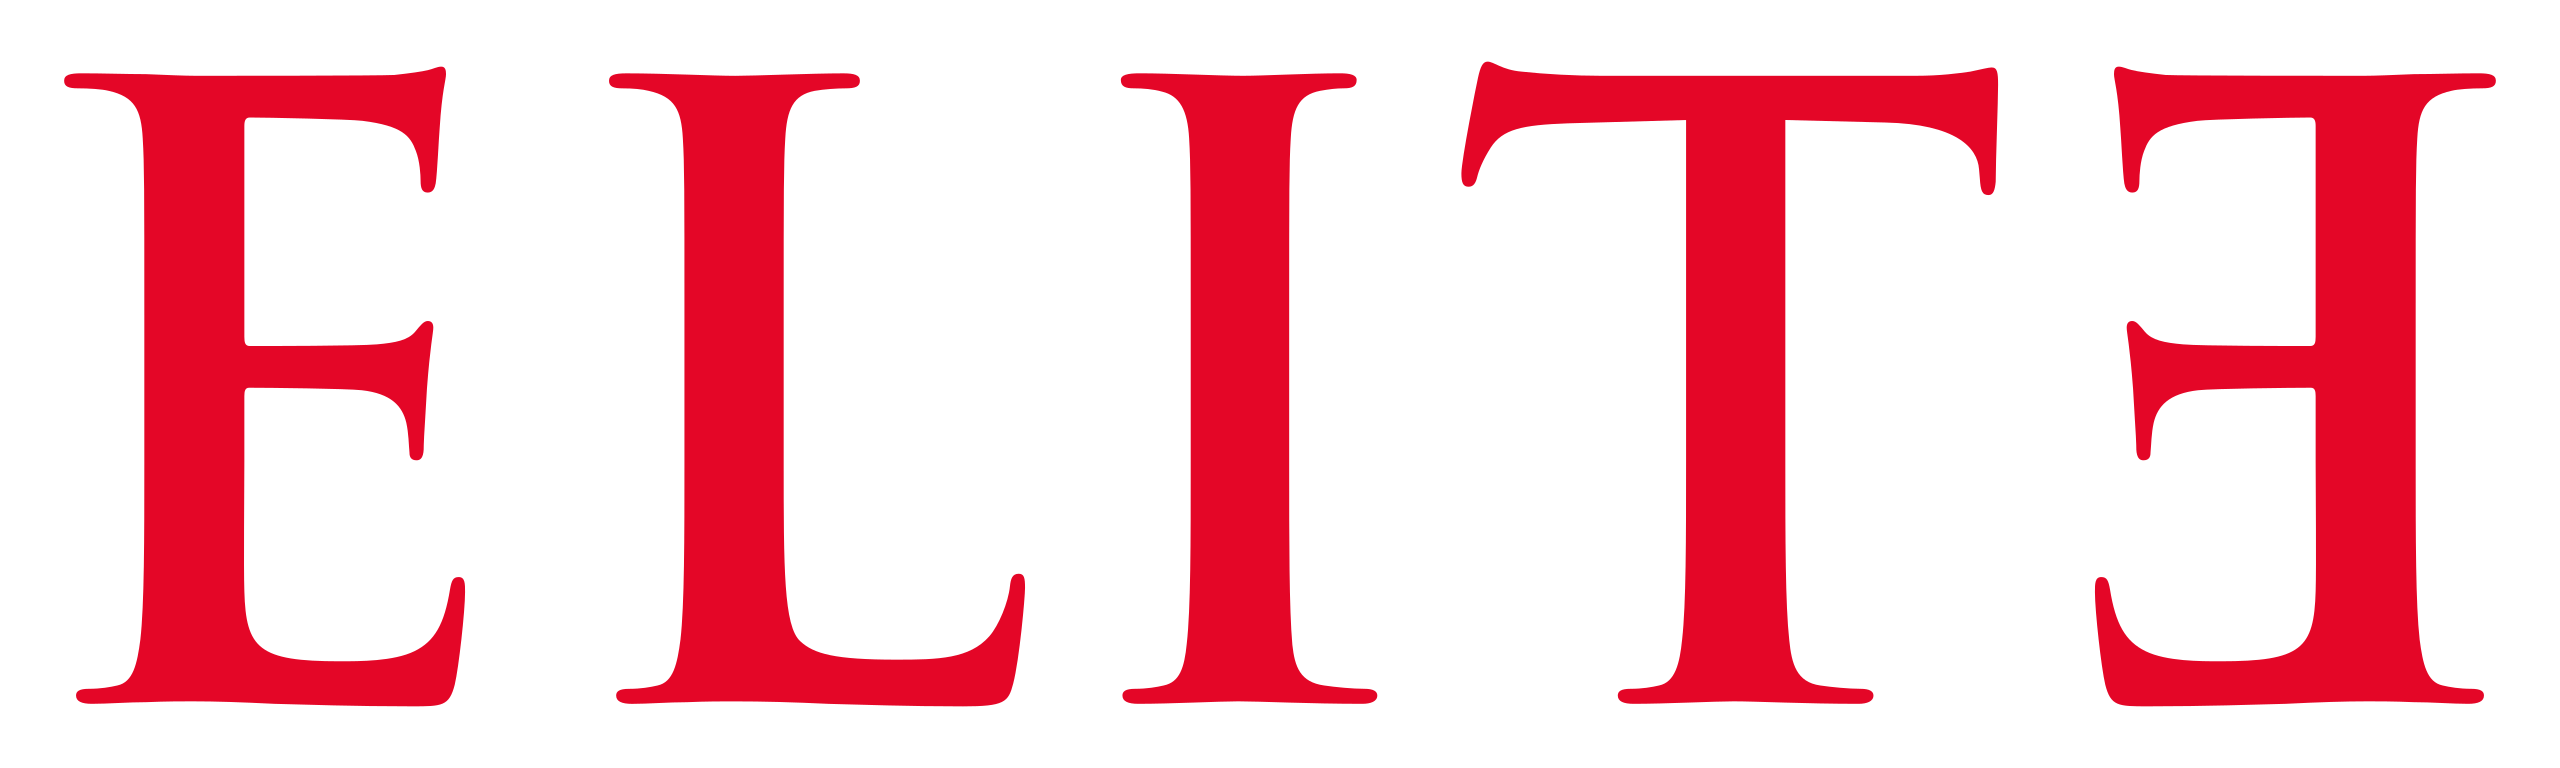 File:Netflix-new-icon.png - Wikimedia Commons